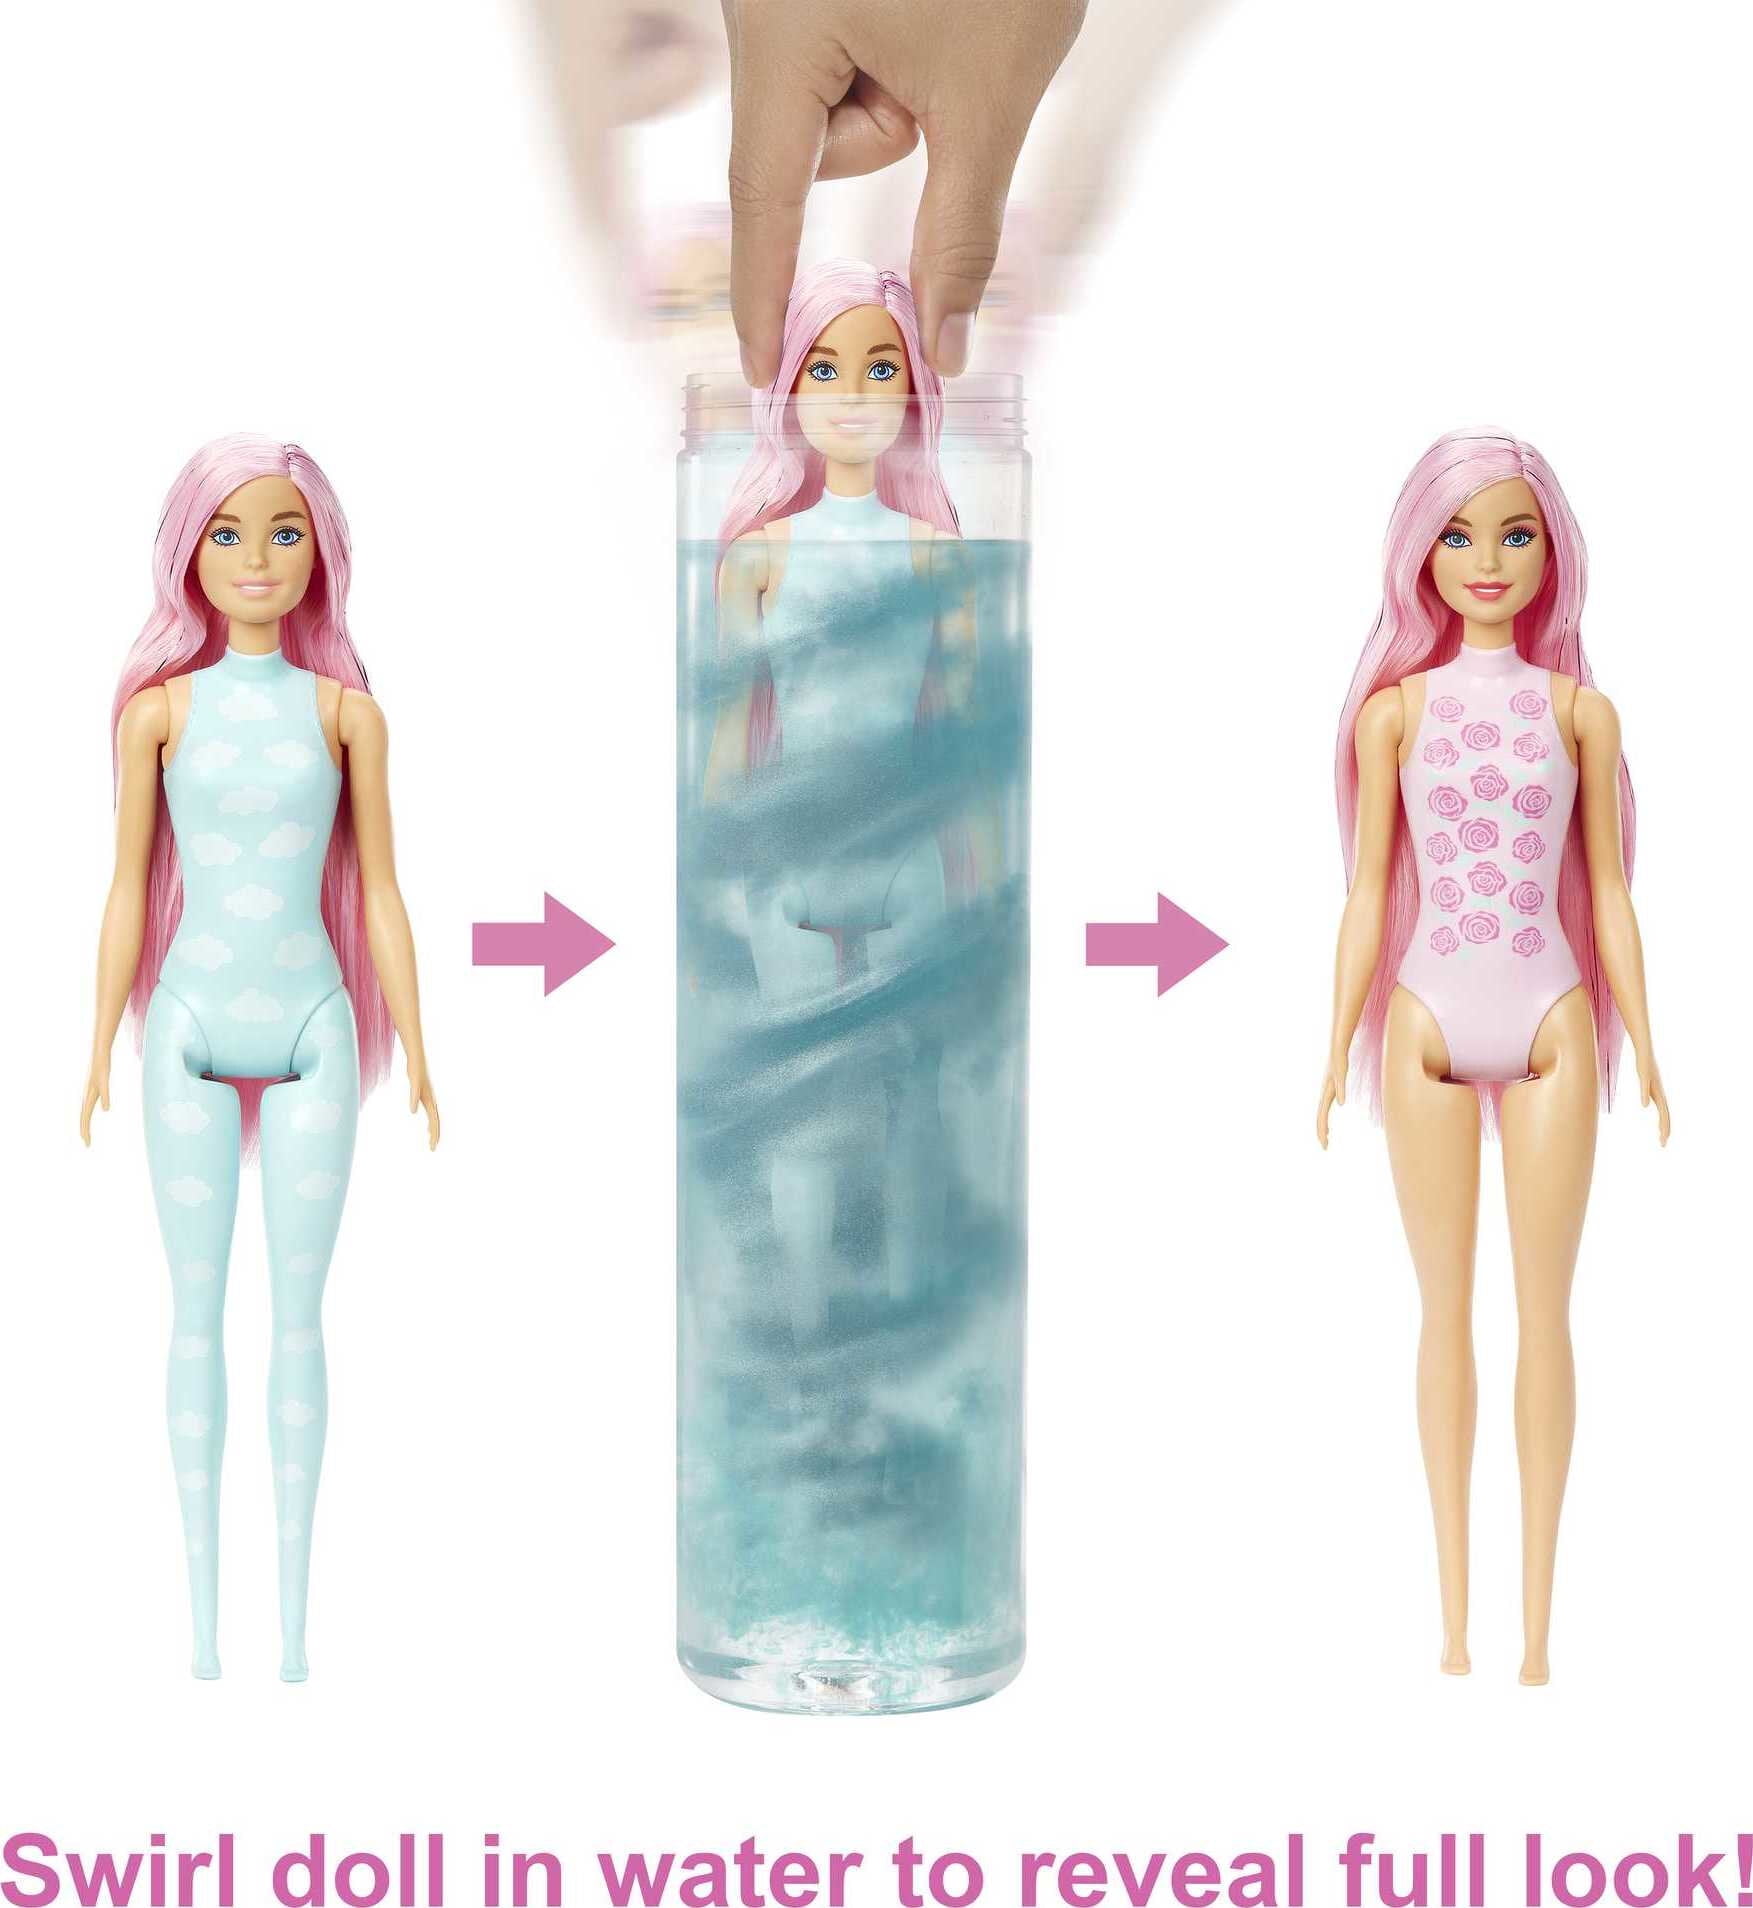 Barbie Color Reveal Barbie Duhová galaxie HJX61 tube mattel